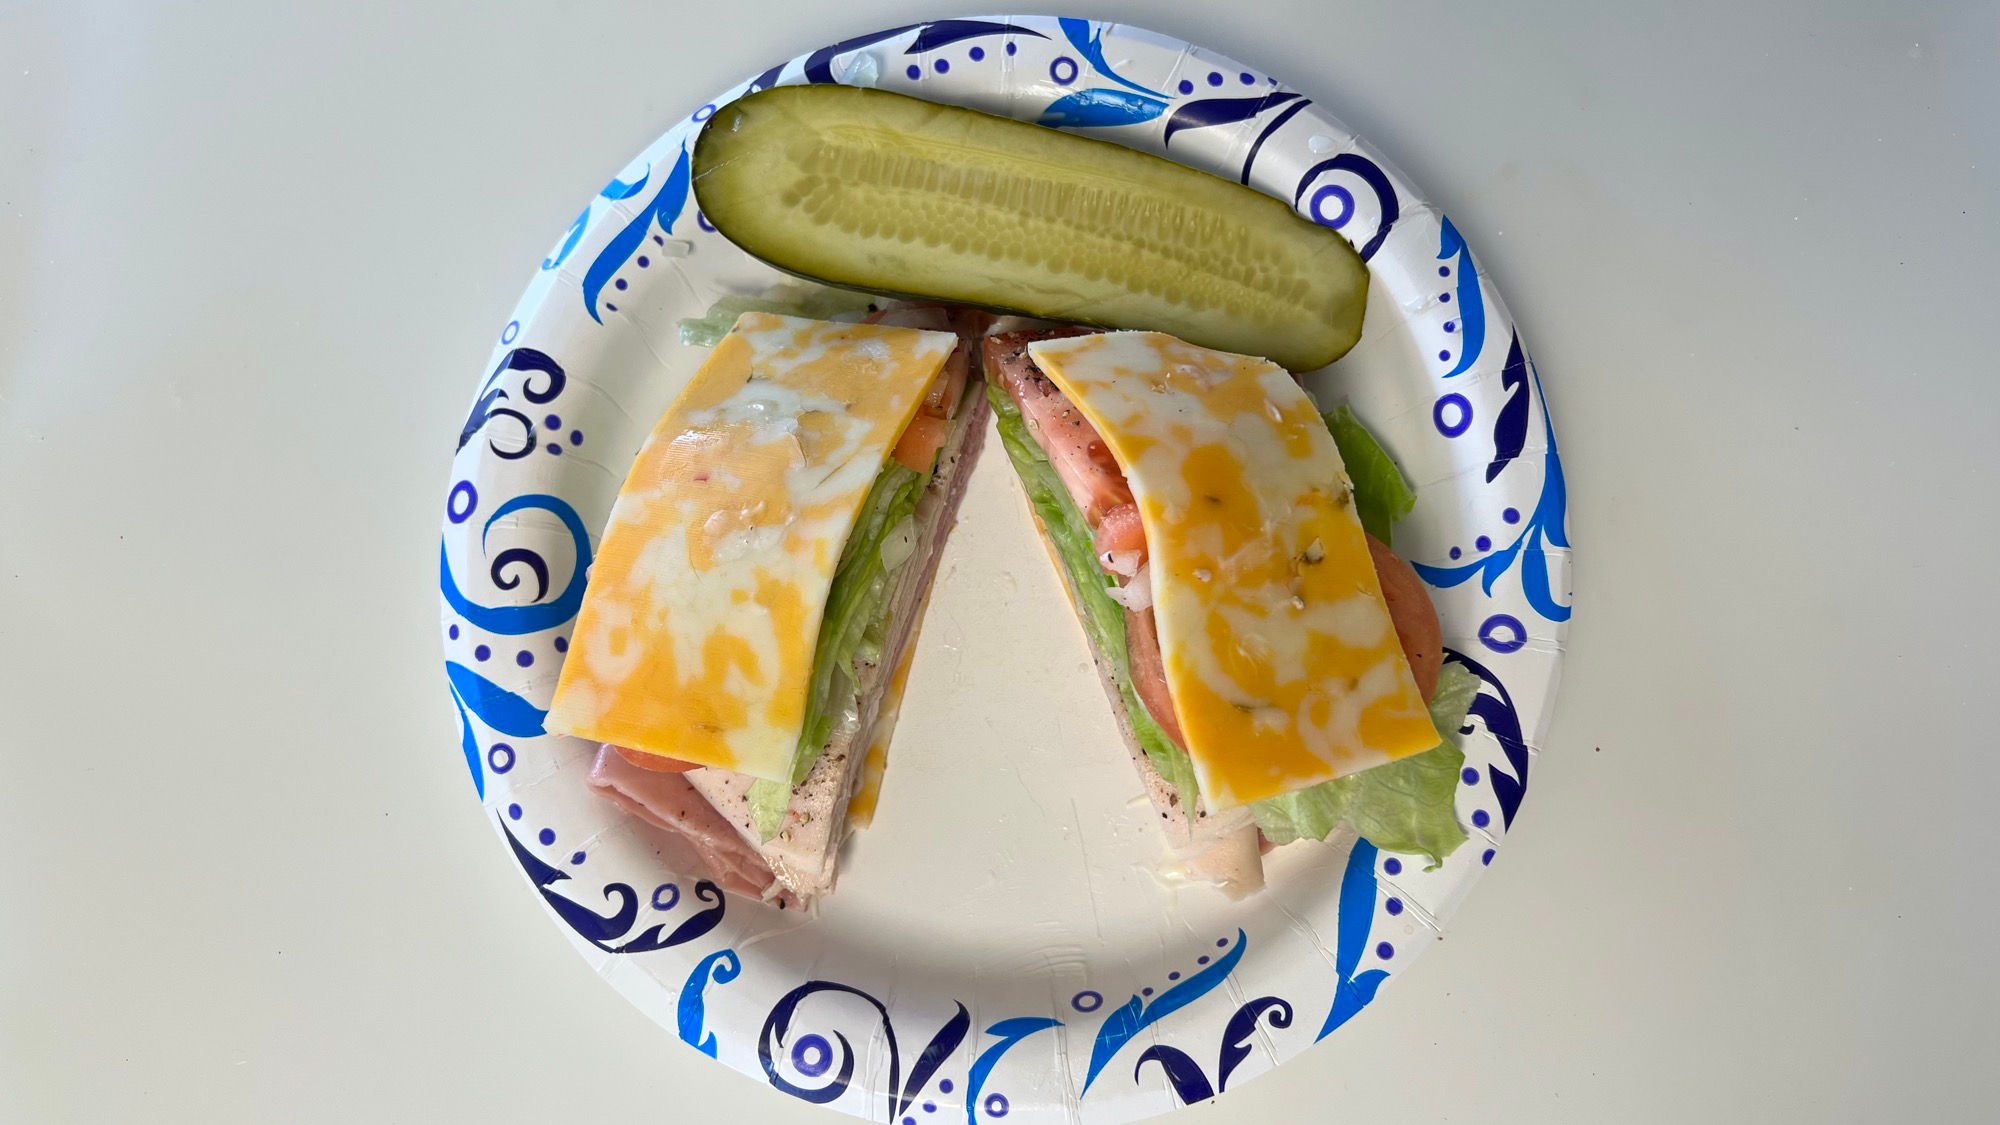 Half Cheesewich Cut in Half